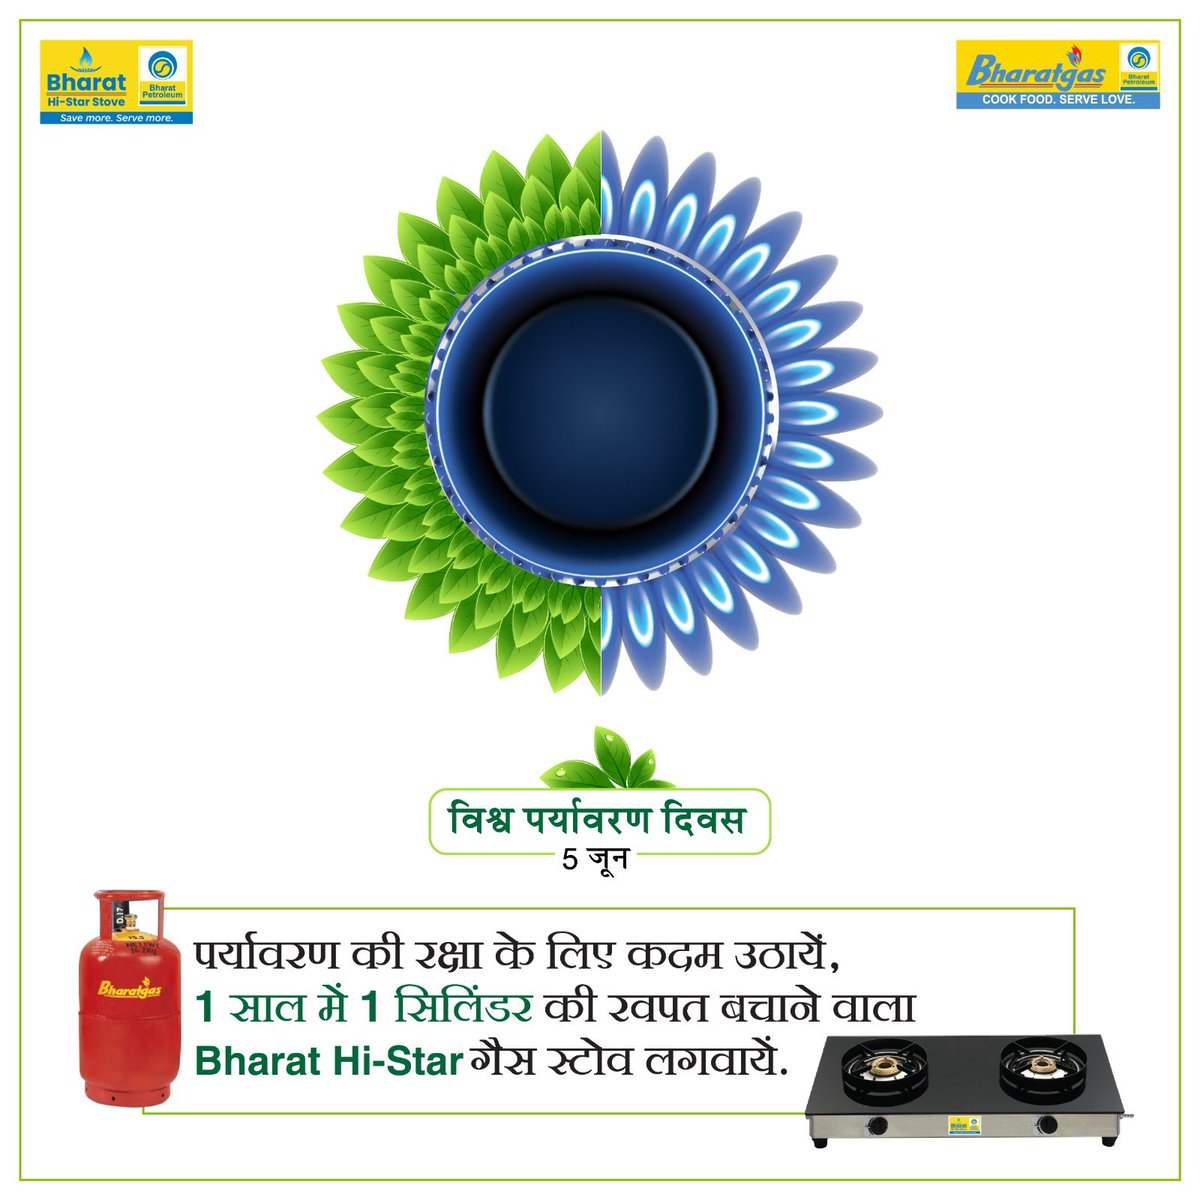 भारतगैस, आप सभी के लिए एक इको फ्रेंडली तोहफ़ा लेकर आया है.

This World Environment Day, switch to Bharat Hi-Star Gas Stove and save energy as well as environment.

#WorldEnvironmentDay #WED2023 #ProtectOurPlanet #ConservationMatters #HiStar #GasStove